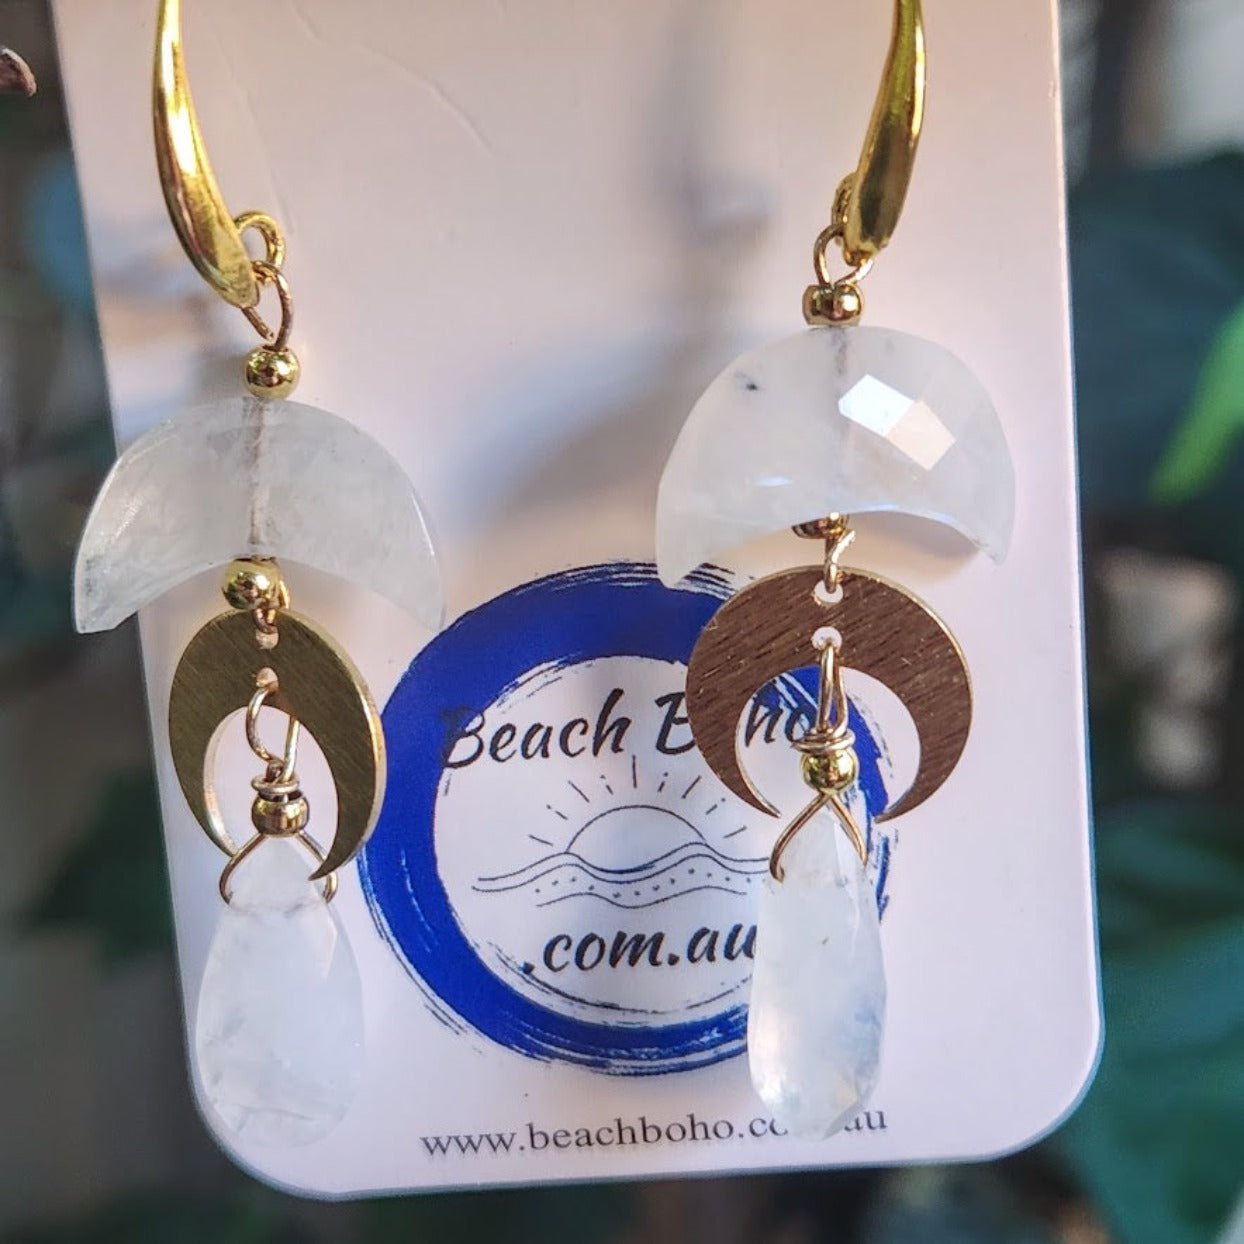 MOON CRESCENT DROP - GOLD HOOK EARRINGS - Premium earrings from www.beachboho.com.au - Just $85! Shop now at www.beachboho.com.au